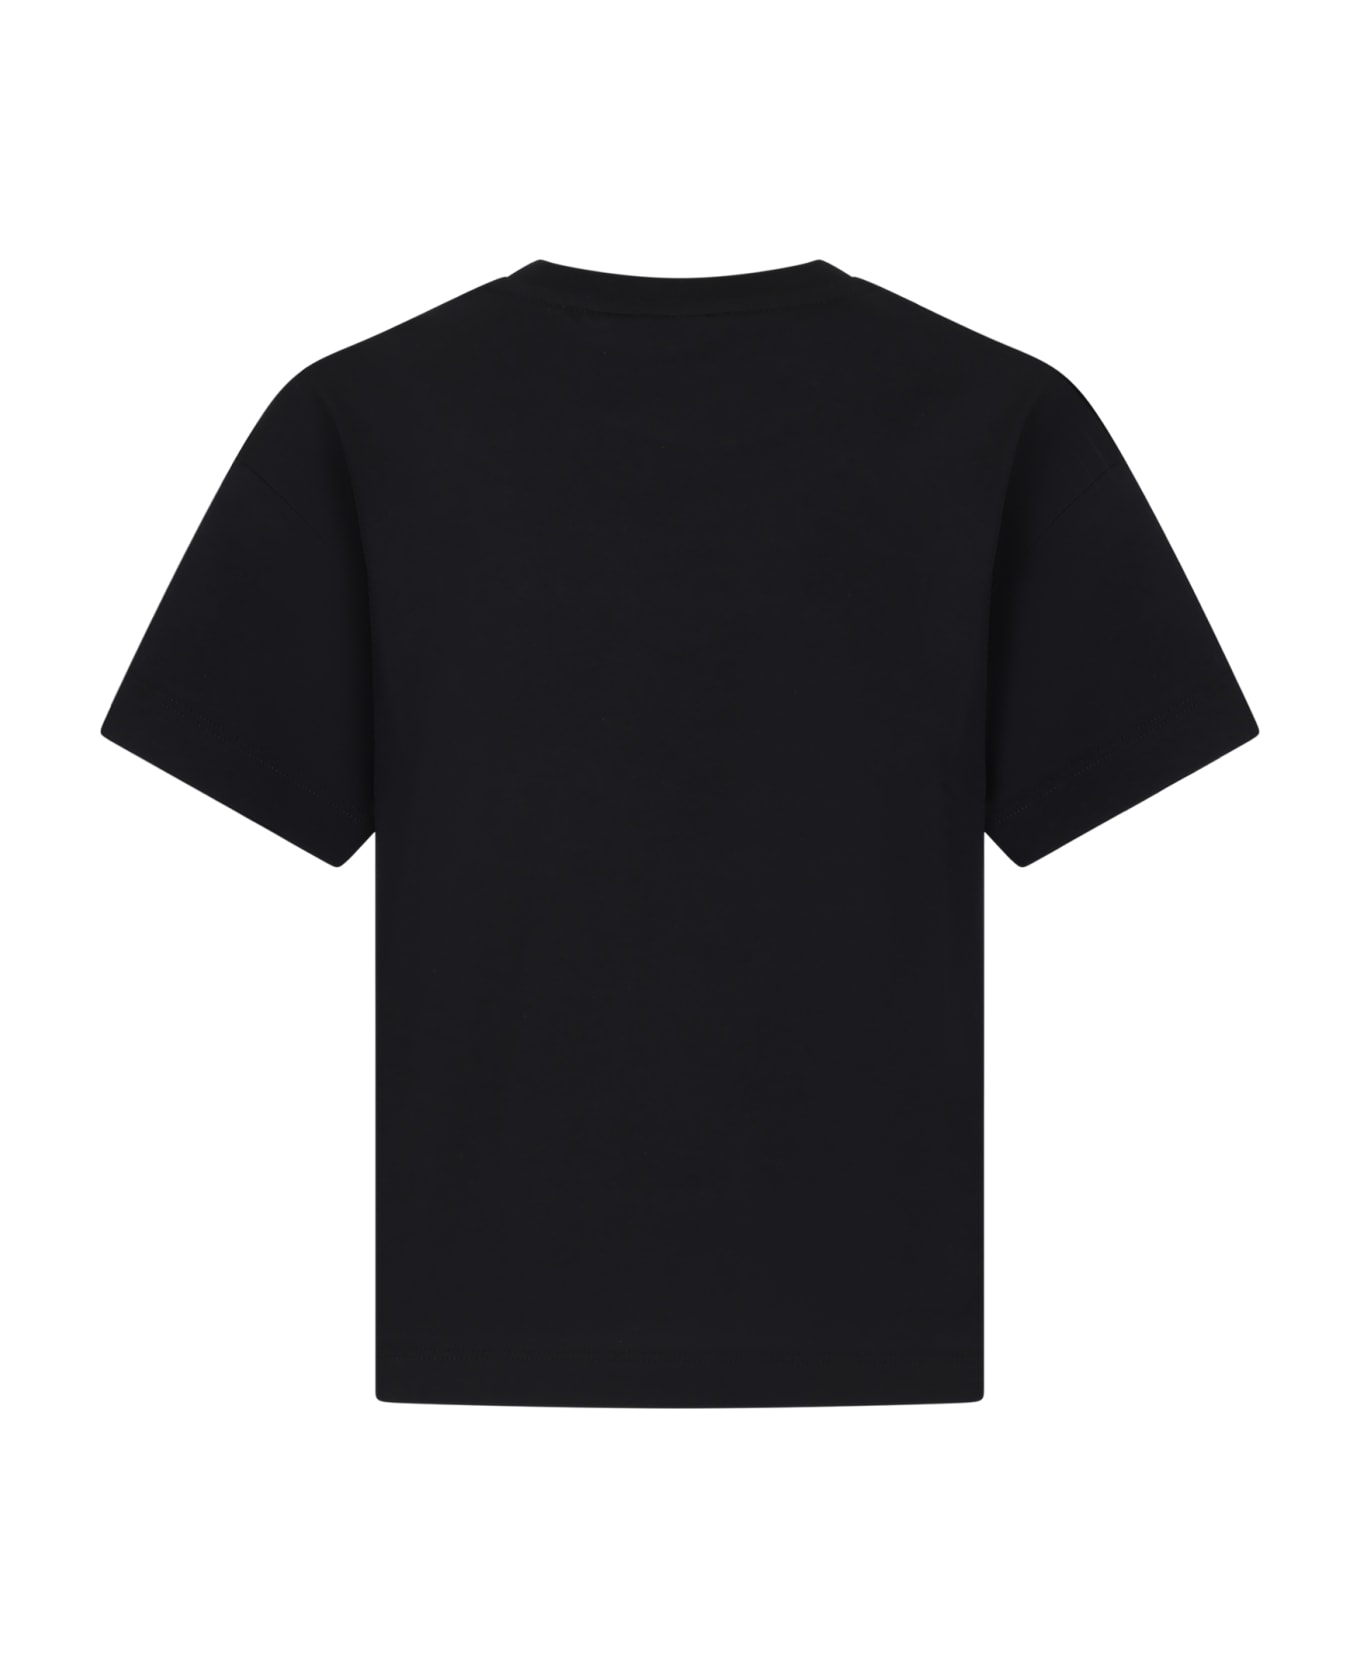 Fendi Black T-shirt For Kids With Logo - Black